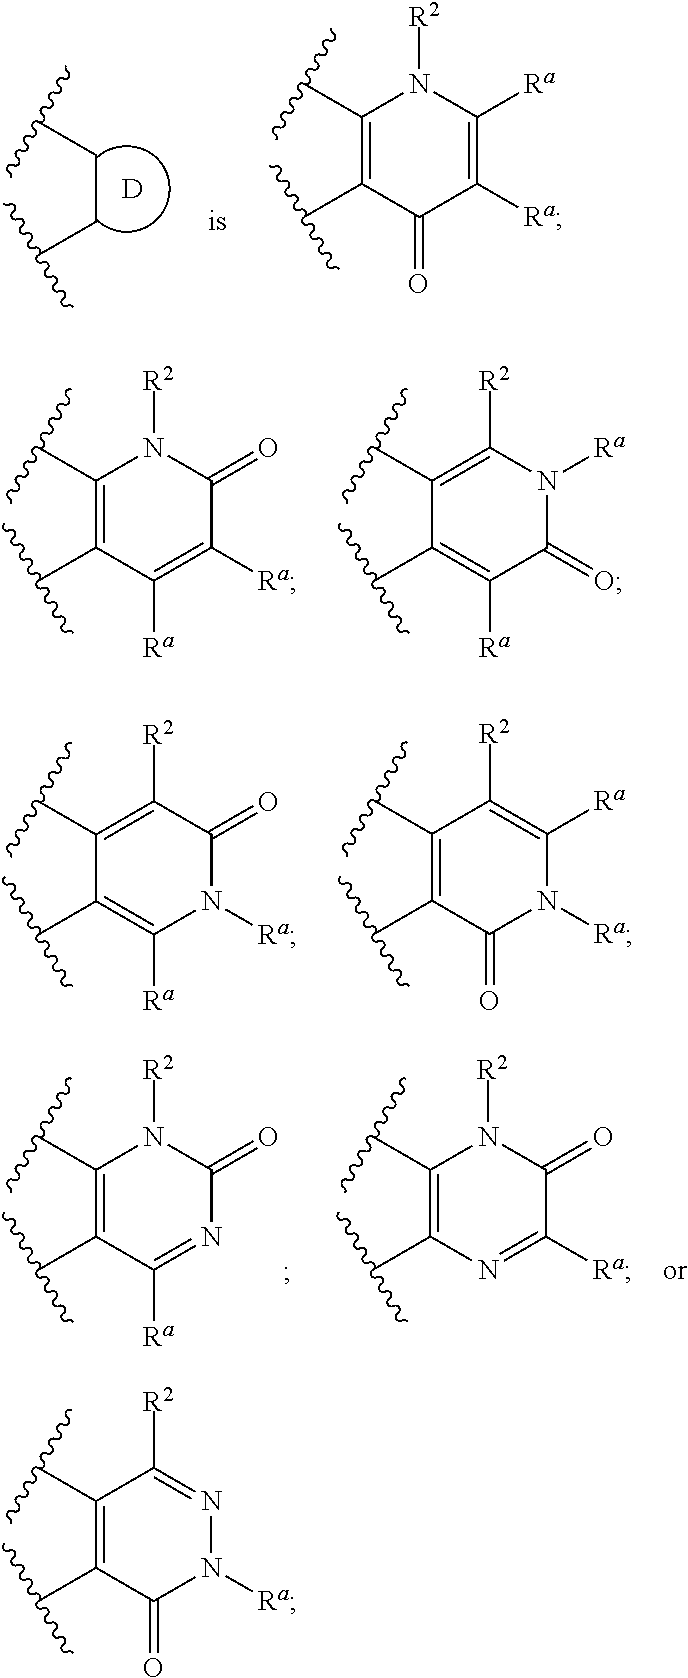 Bicyclic ketone sulfonamide compounds